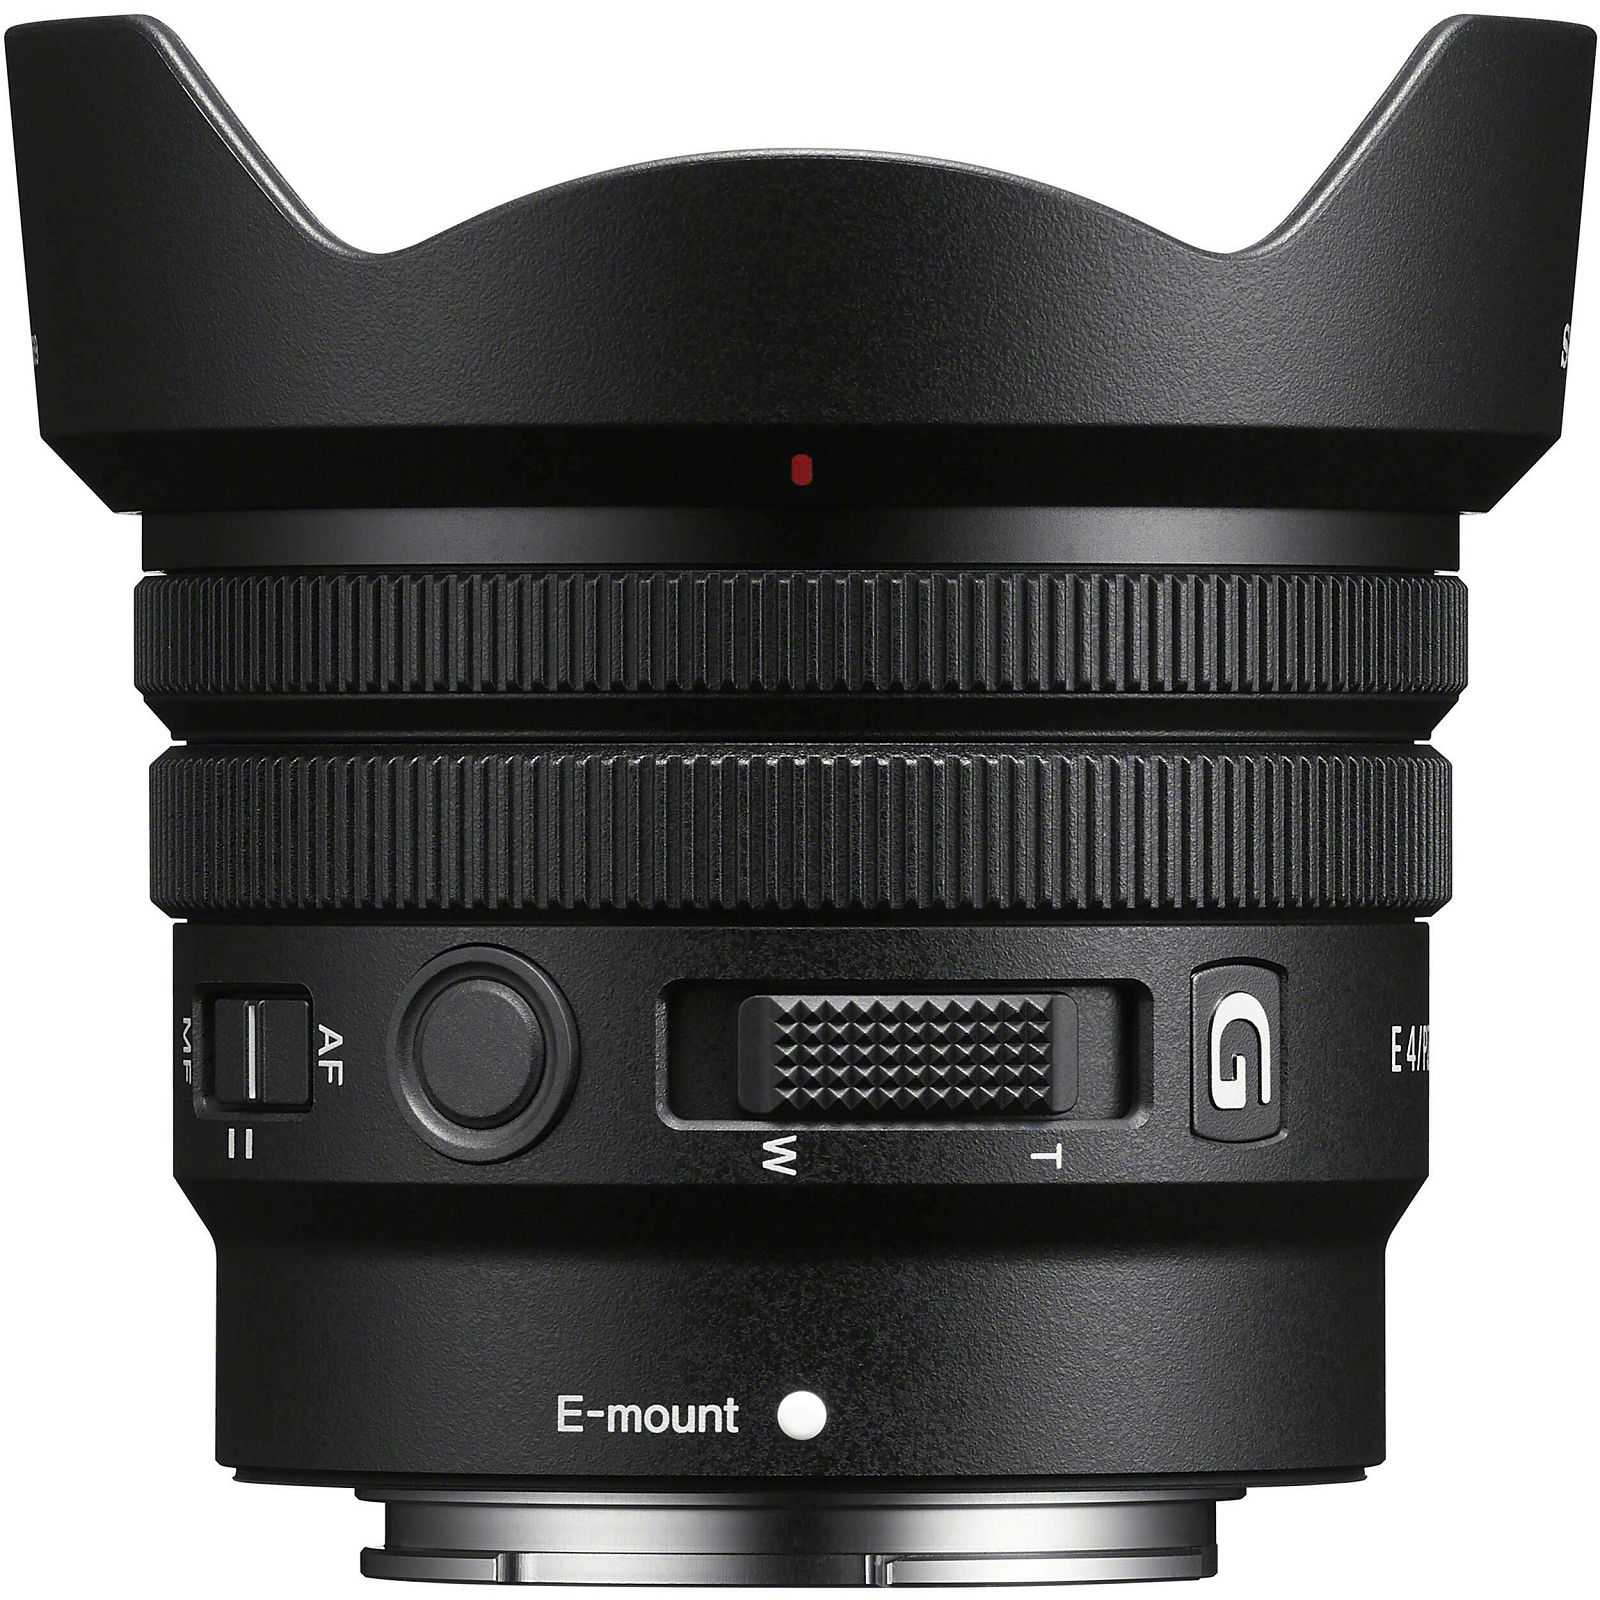 Sony E 10-20mm PZ f/4 G širokokutni objektiv 